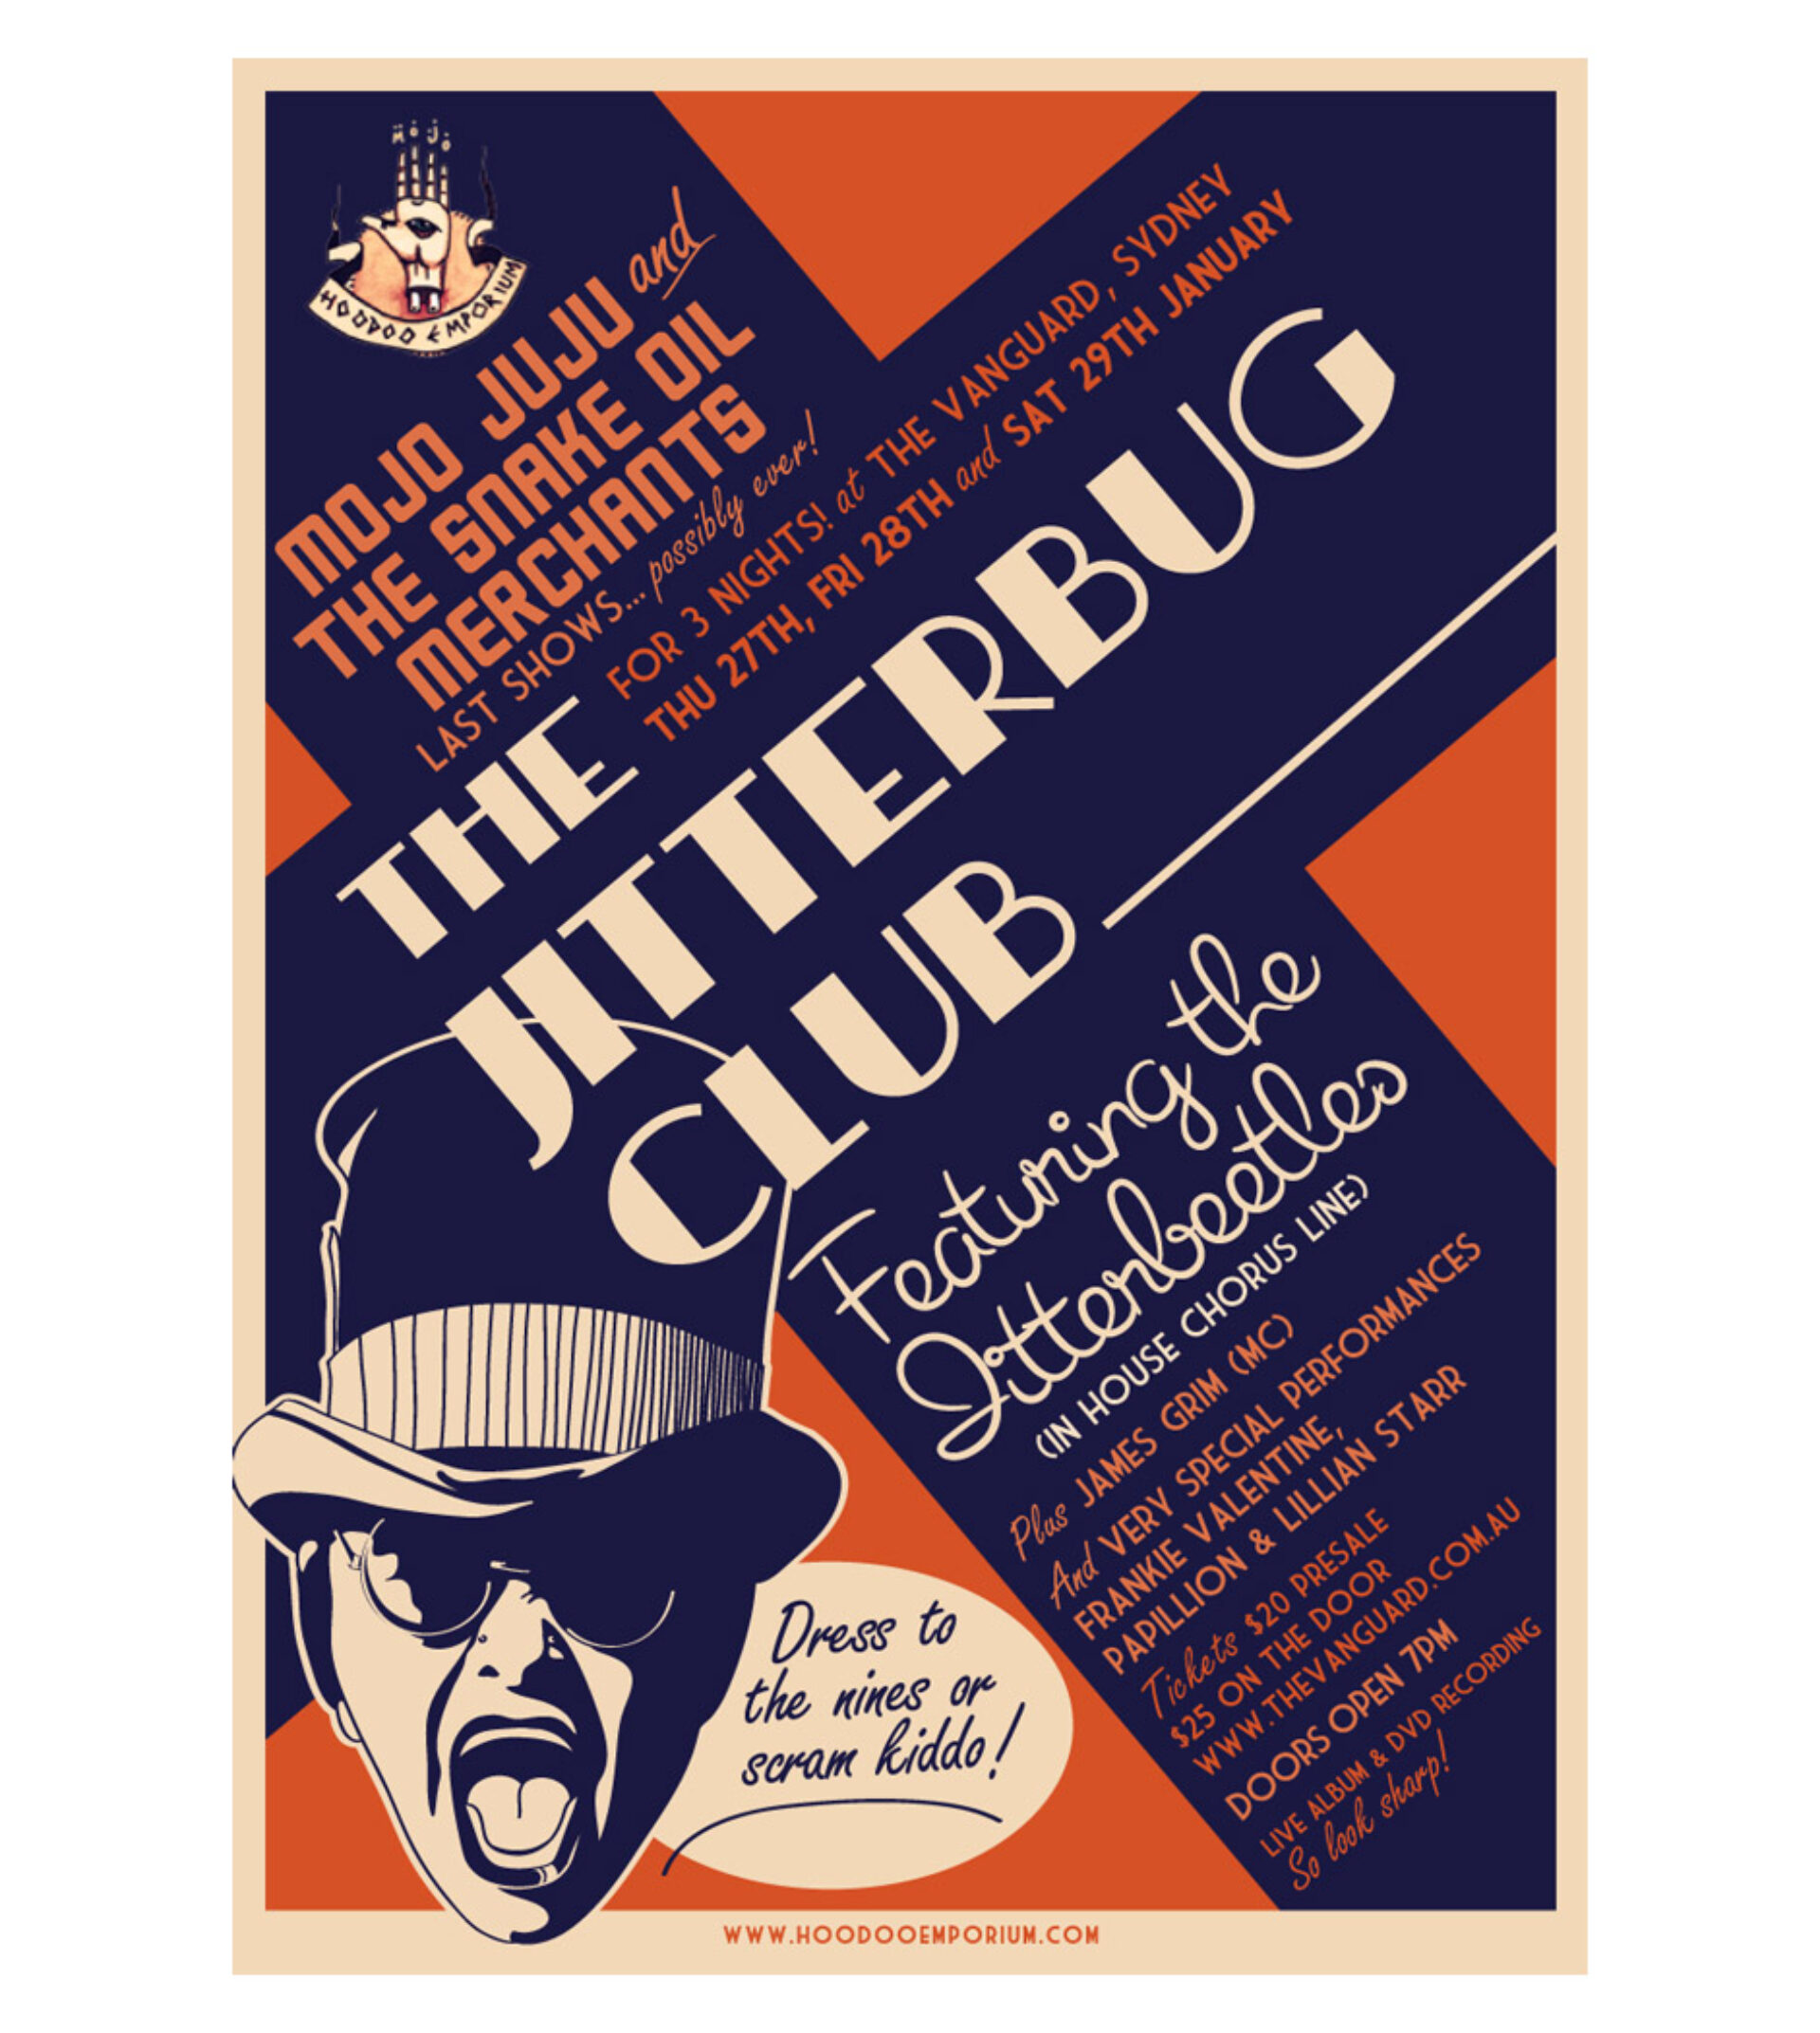 The jitterbug club 02